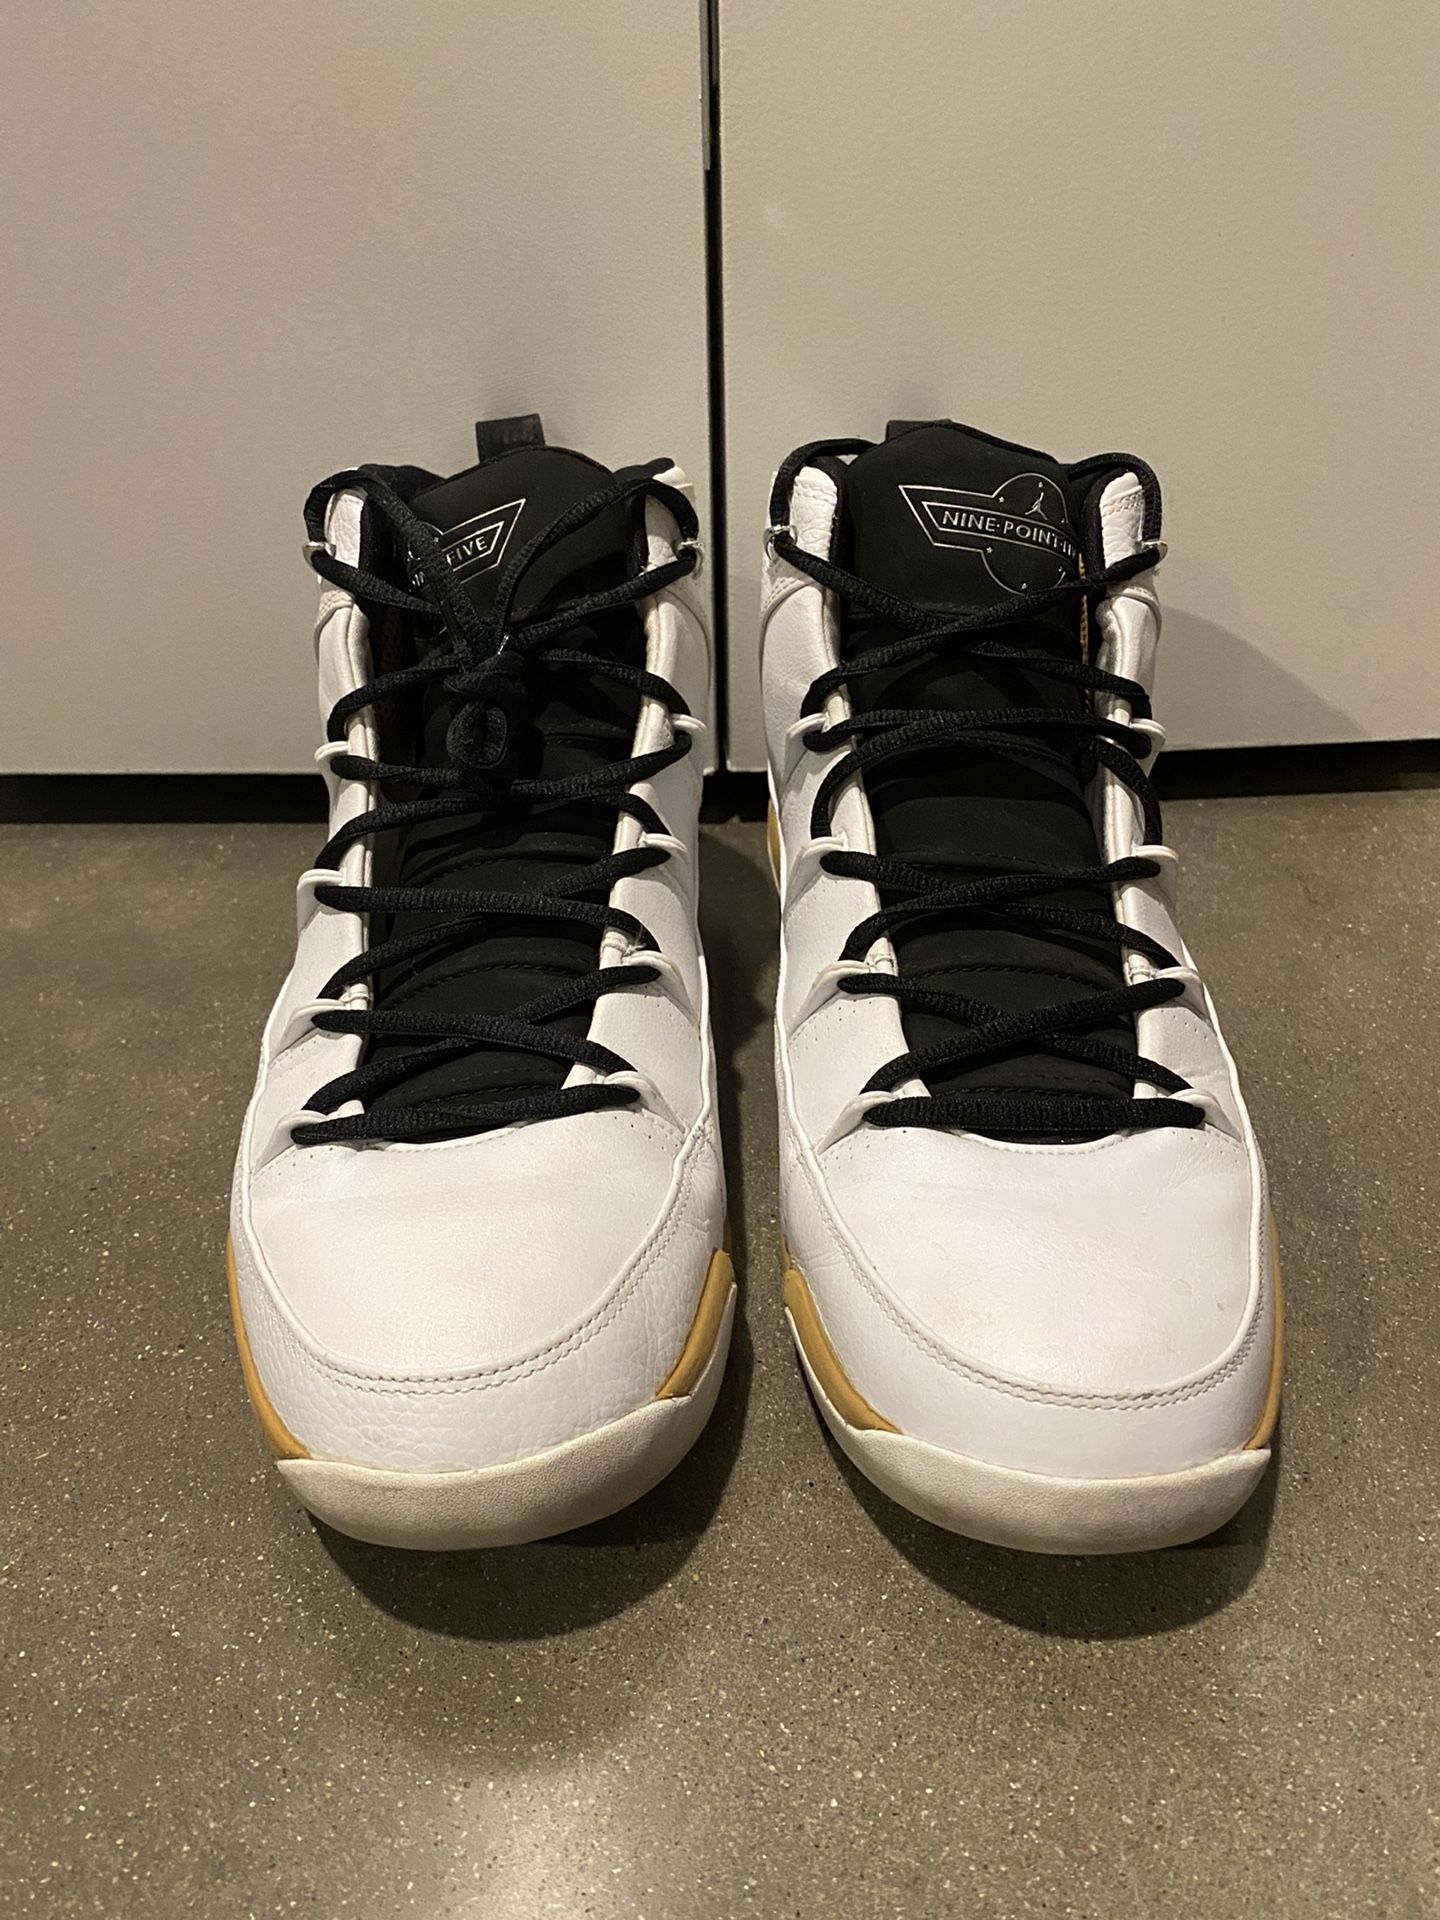 Air Jordan 2006 Team 9.5 'White/Black-Miners Gold' Men's Shoes 314308-111 Sz 14